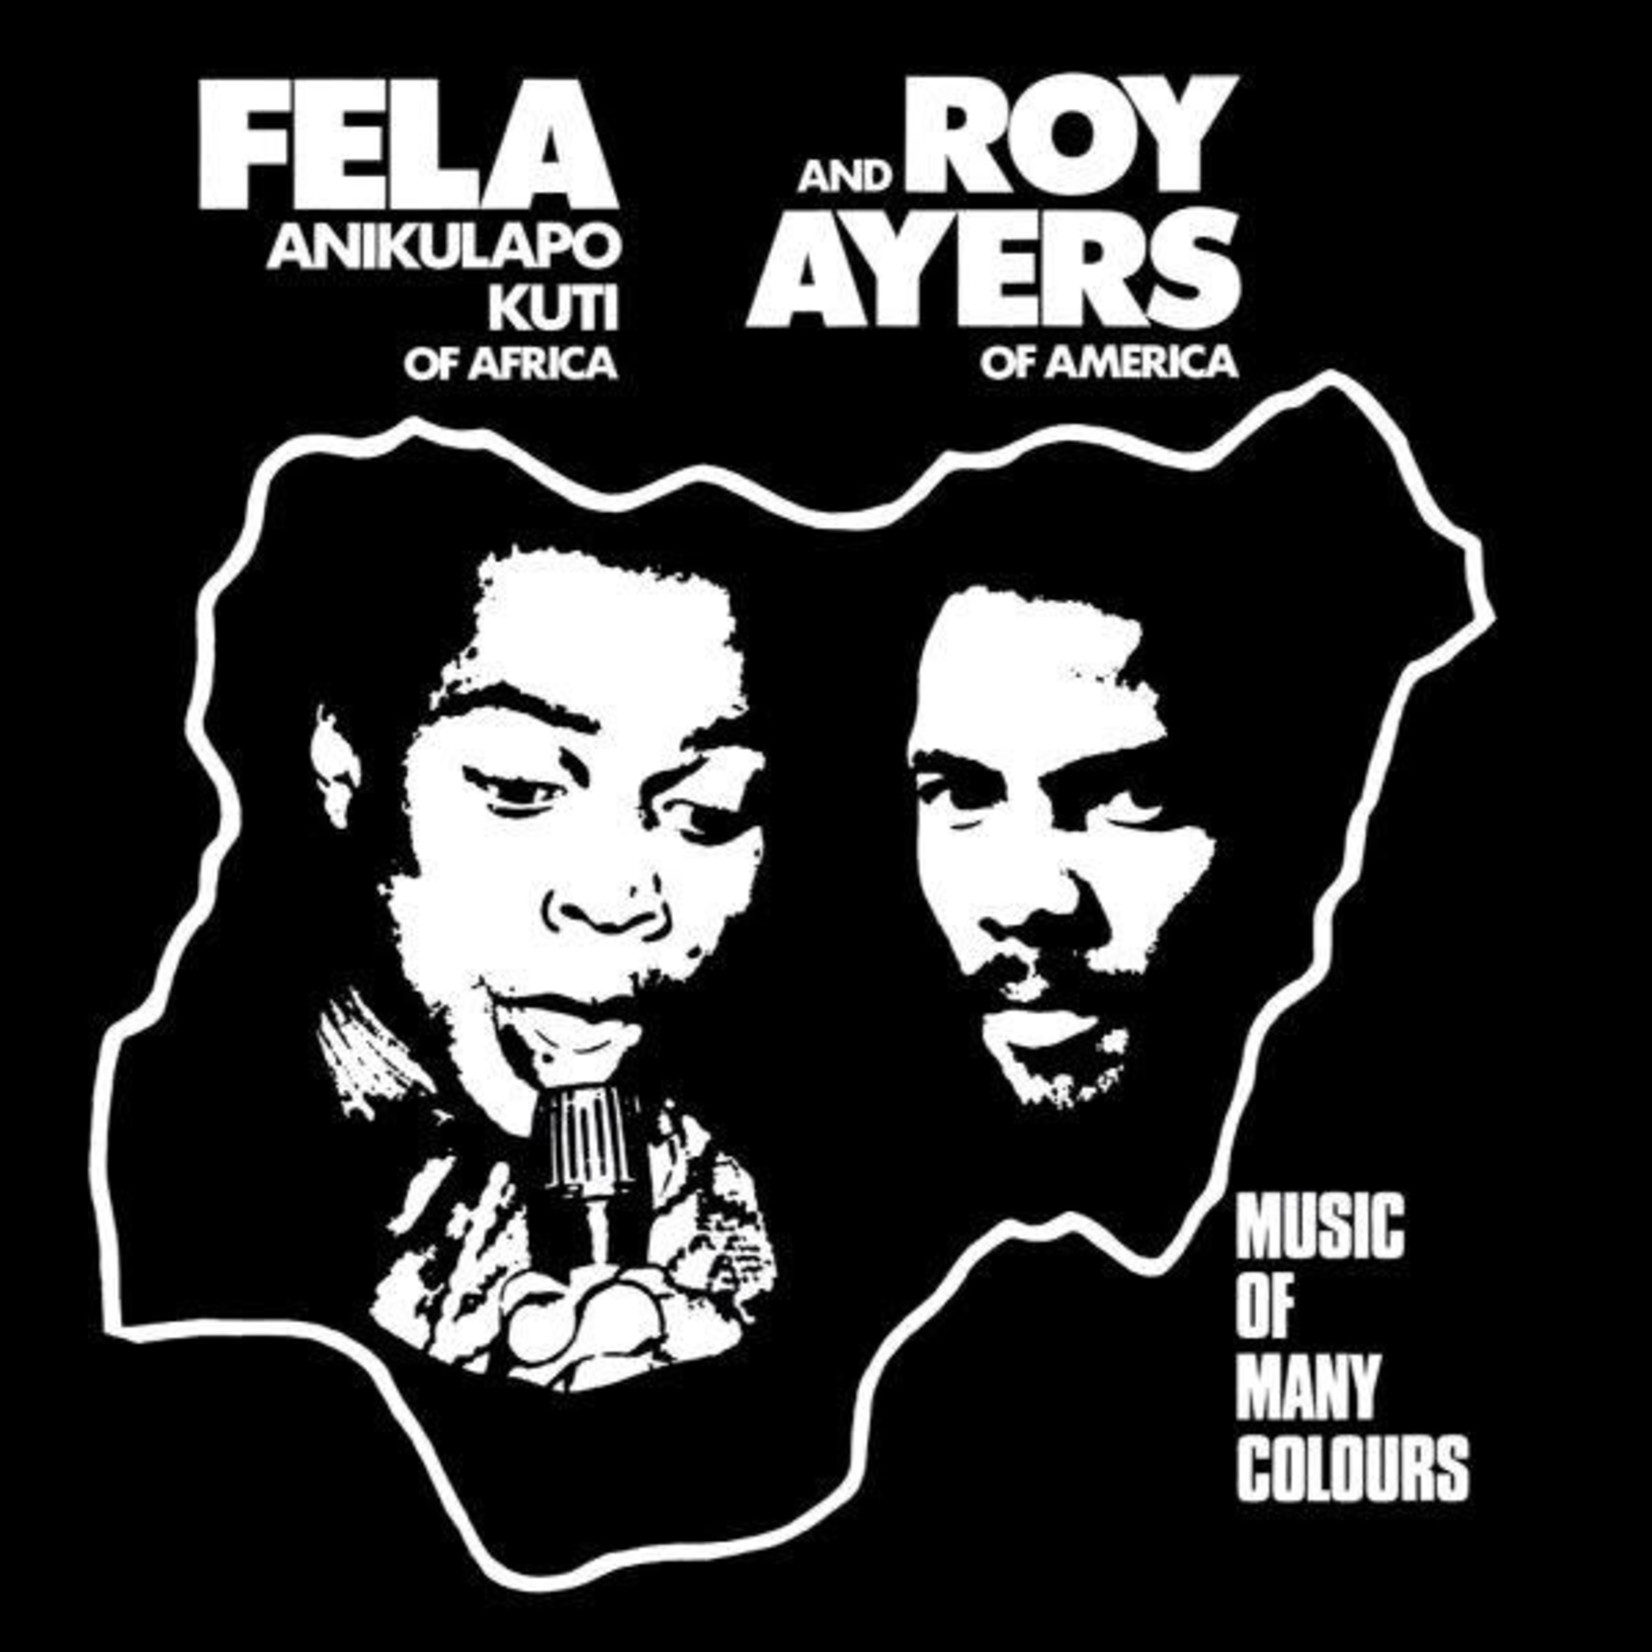 [Discontinued] Fela Kuti - Music of Many Colours